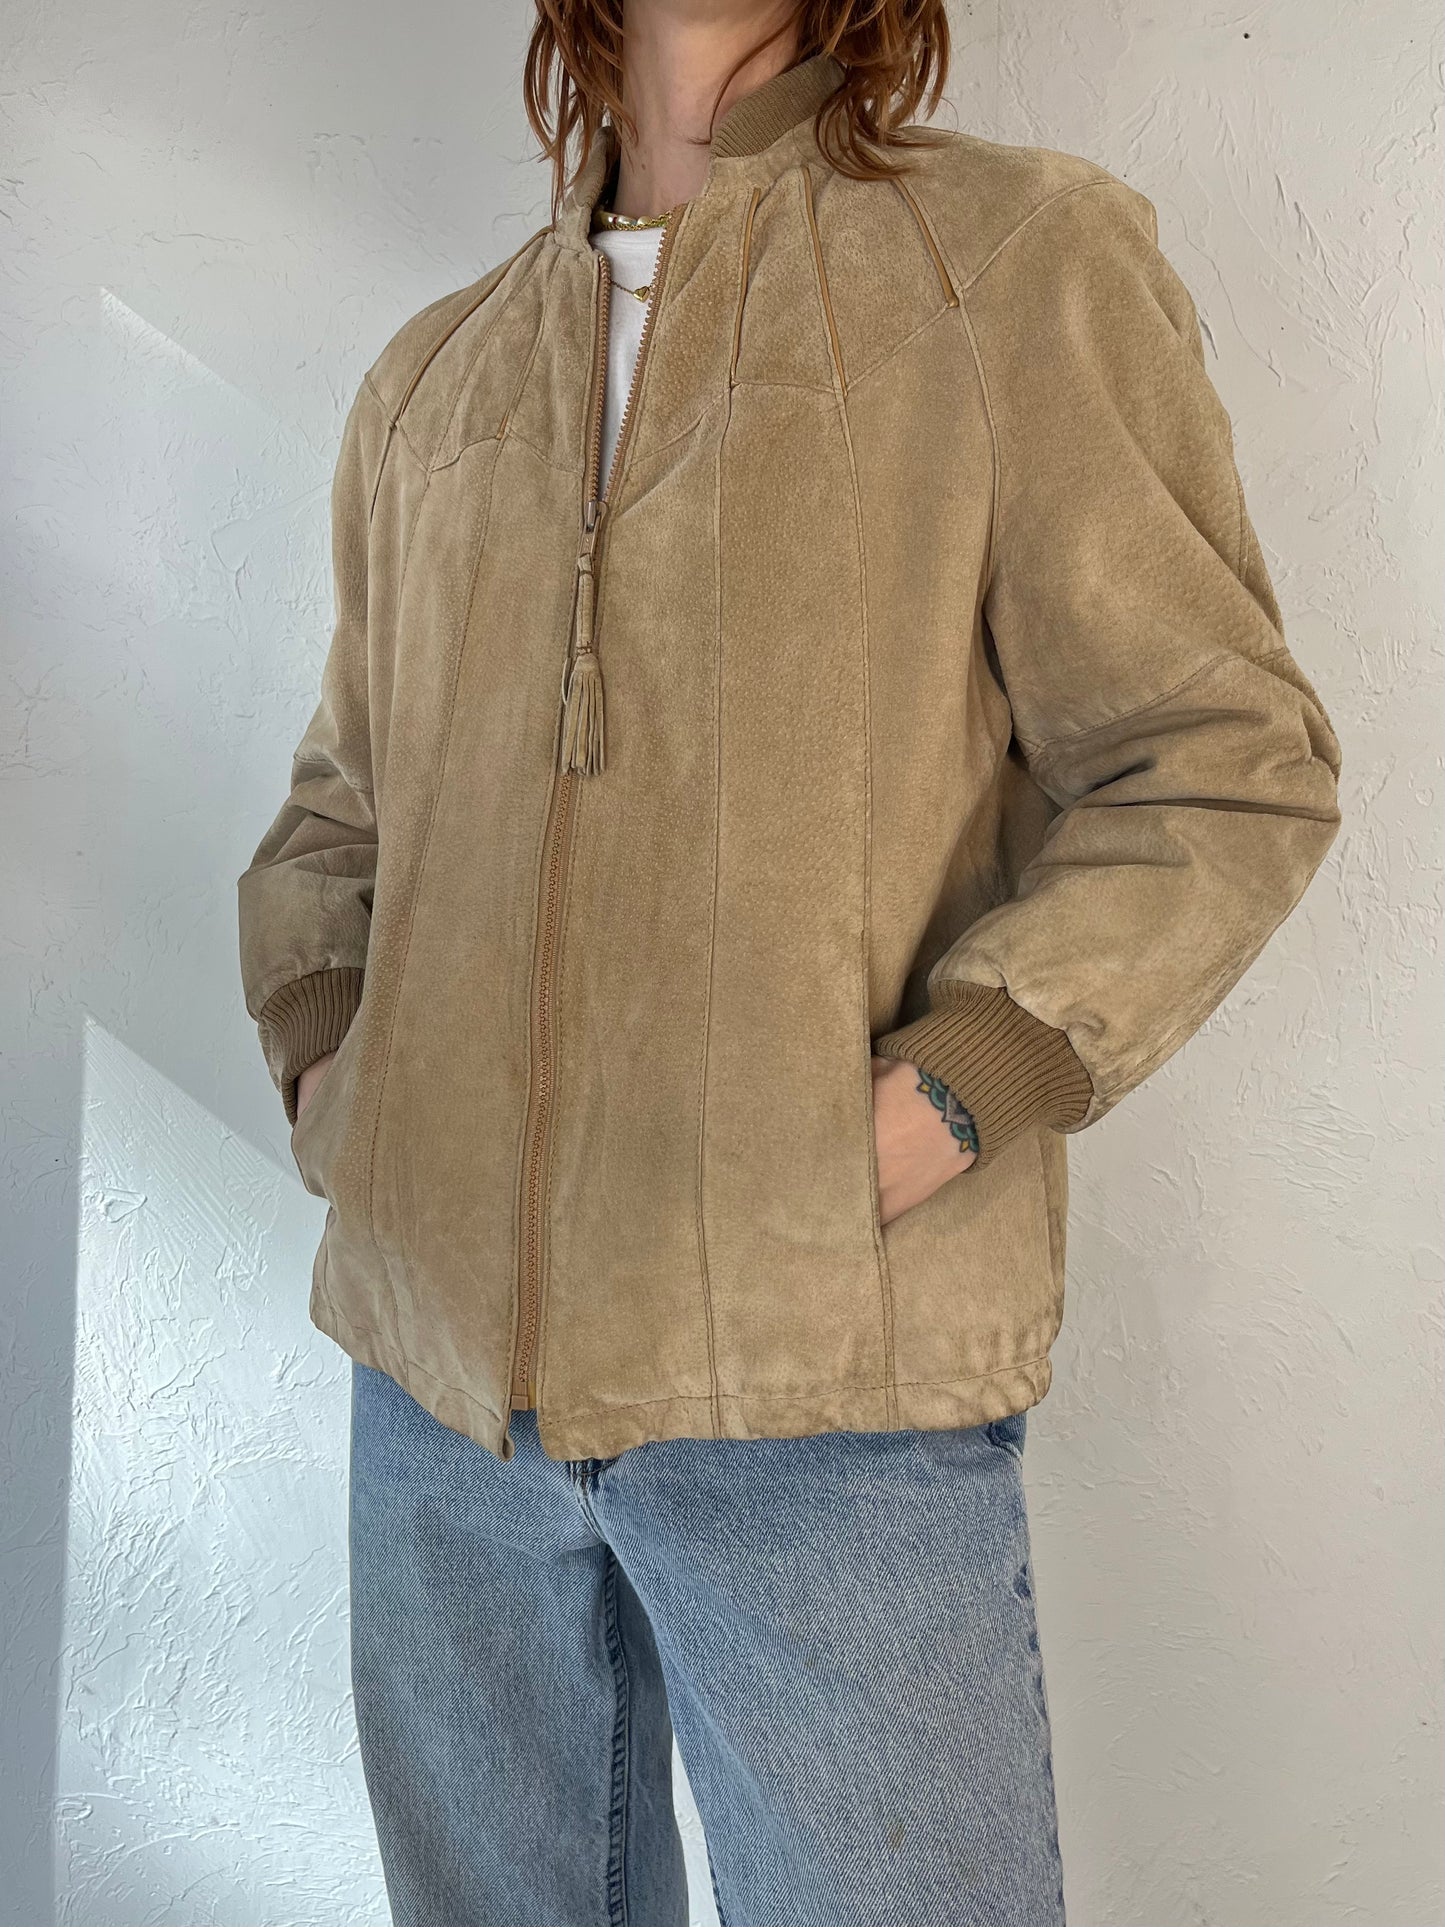 80s 'Karizma' Beige Suede Leather Jacket / Medium